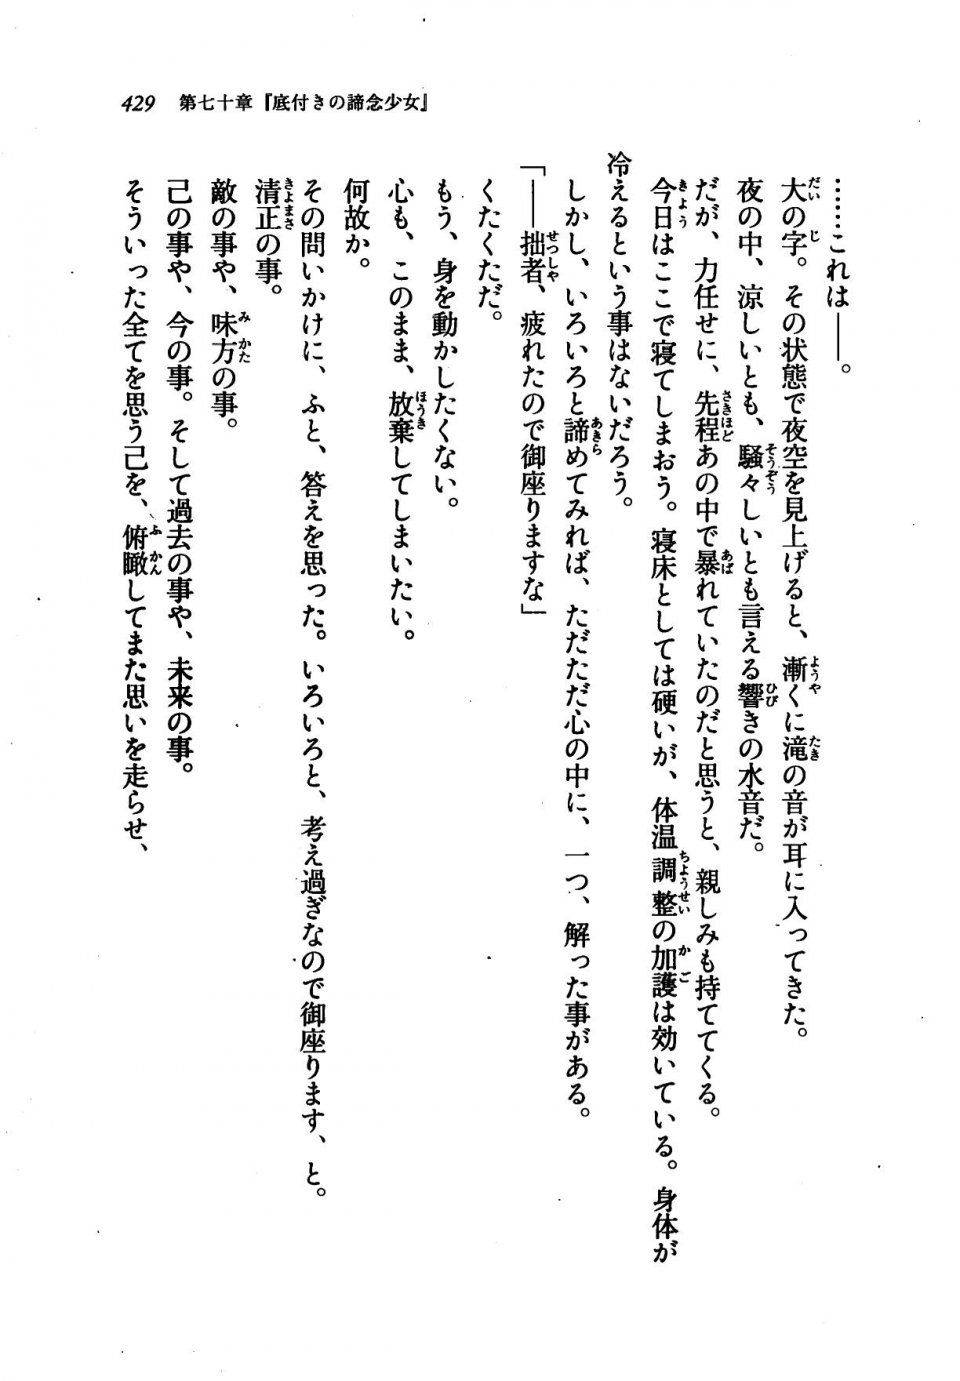 Kyoukai Senjou no Horizon LN Vol 21(8C) Part 1 - Photo #428